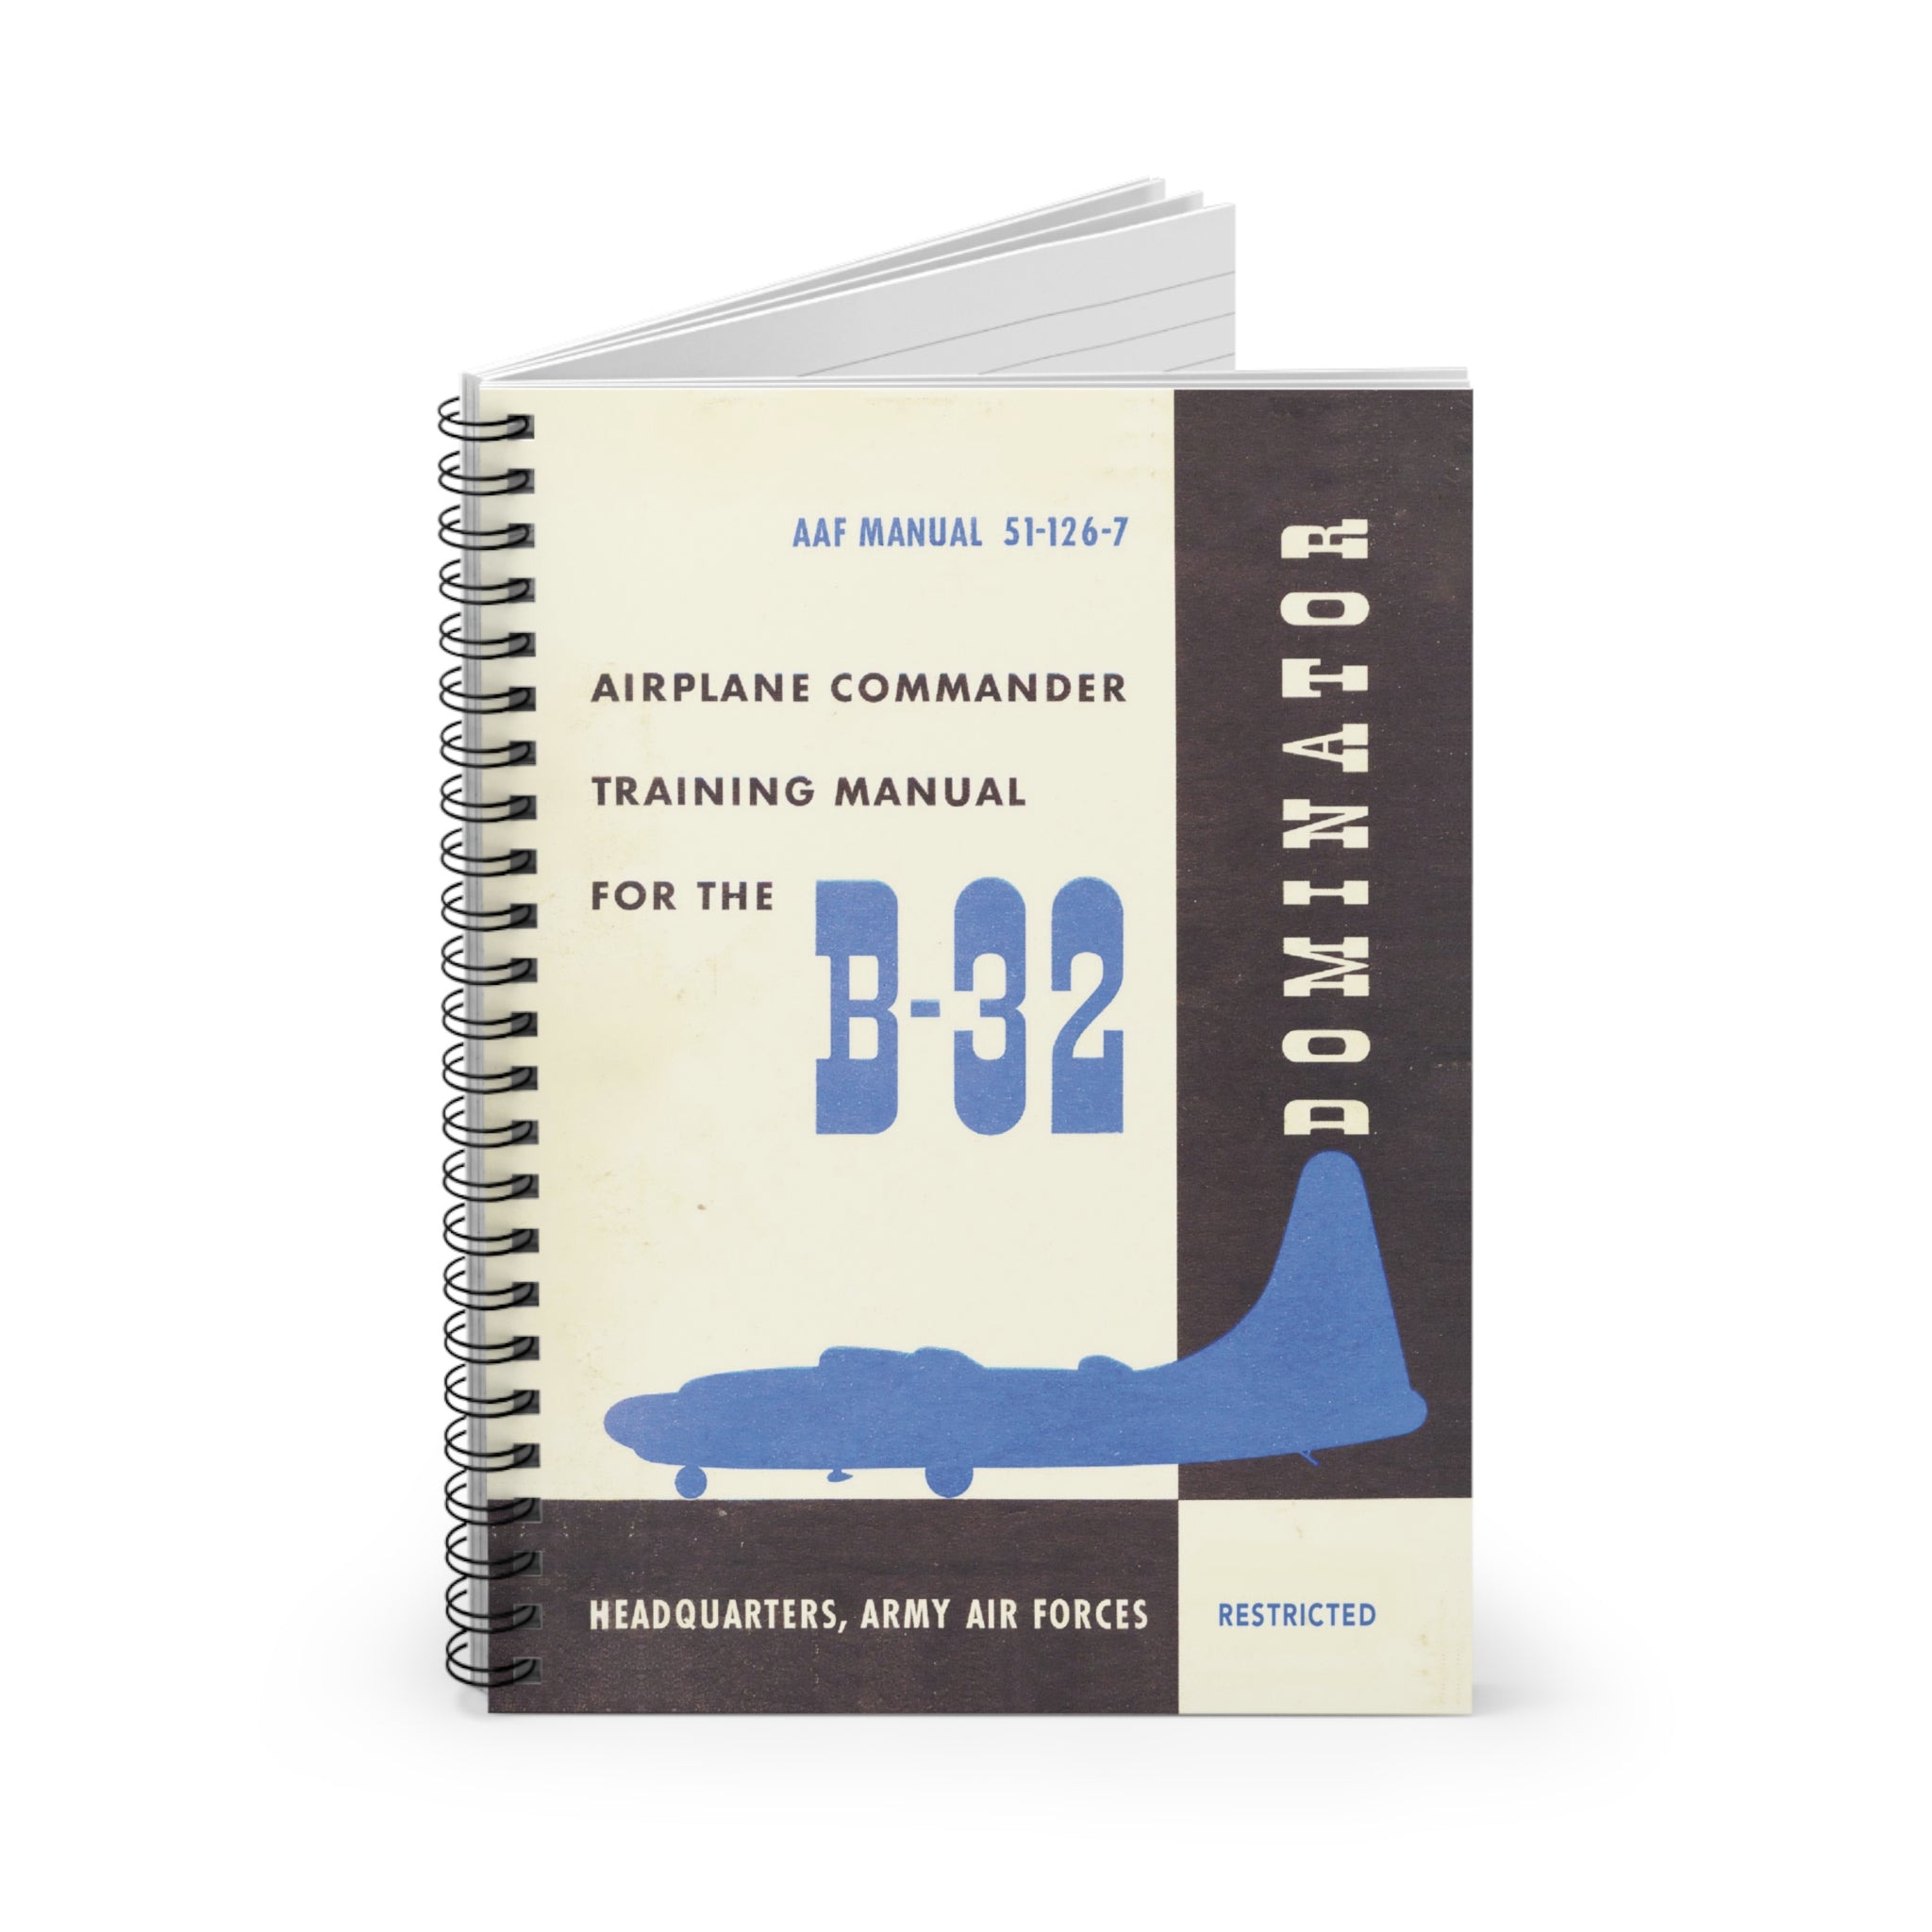 B-32 "Dominator" Inspired Spiral Notebook - I Love a Hangar